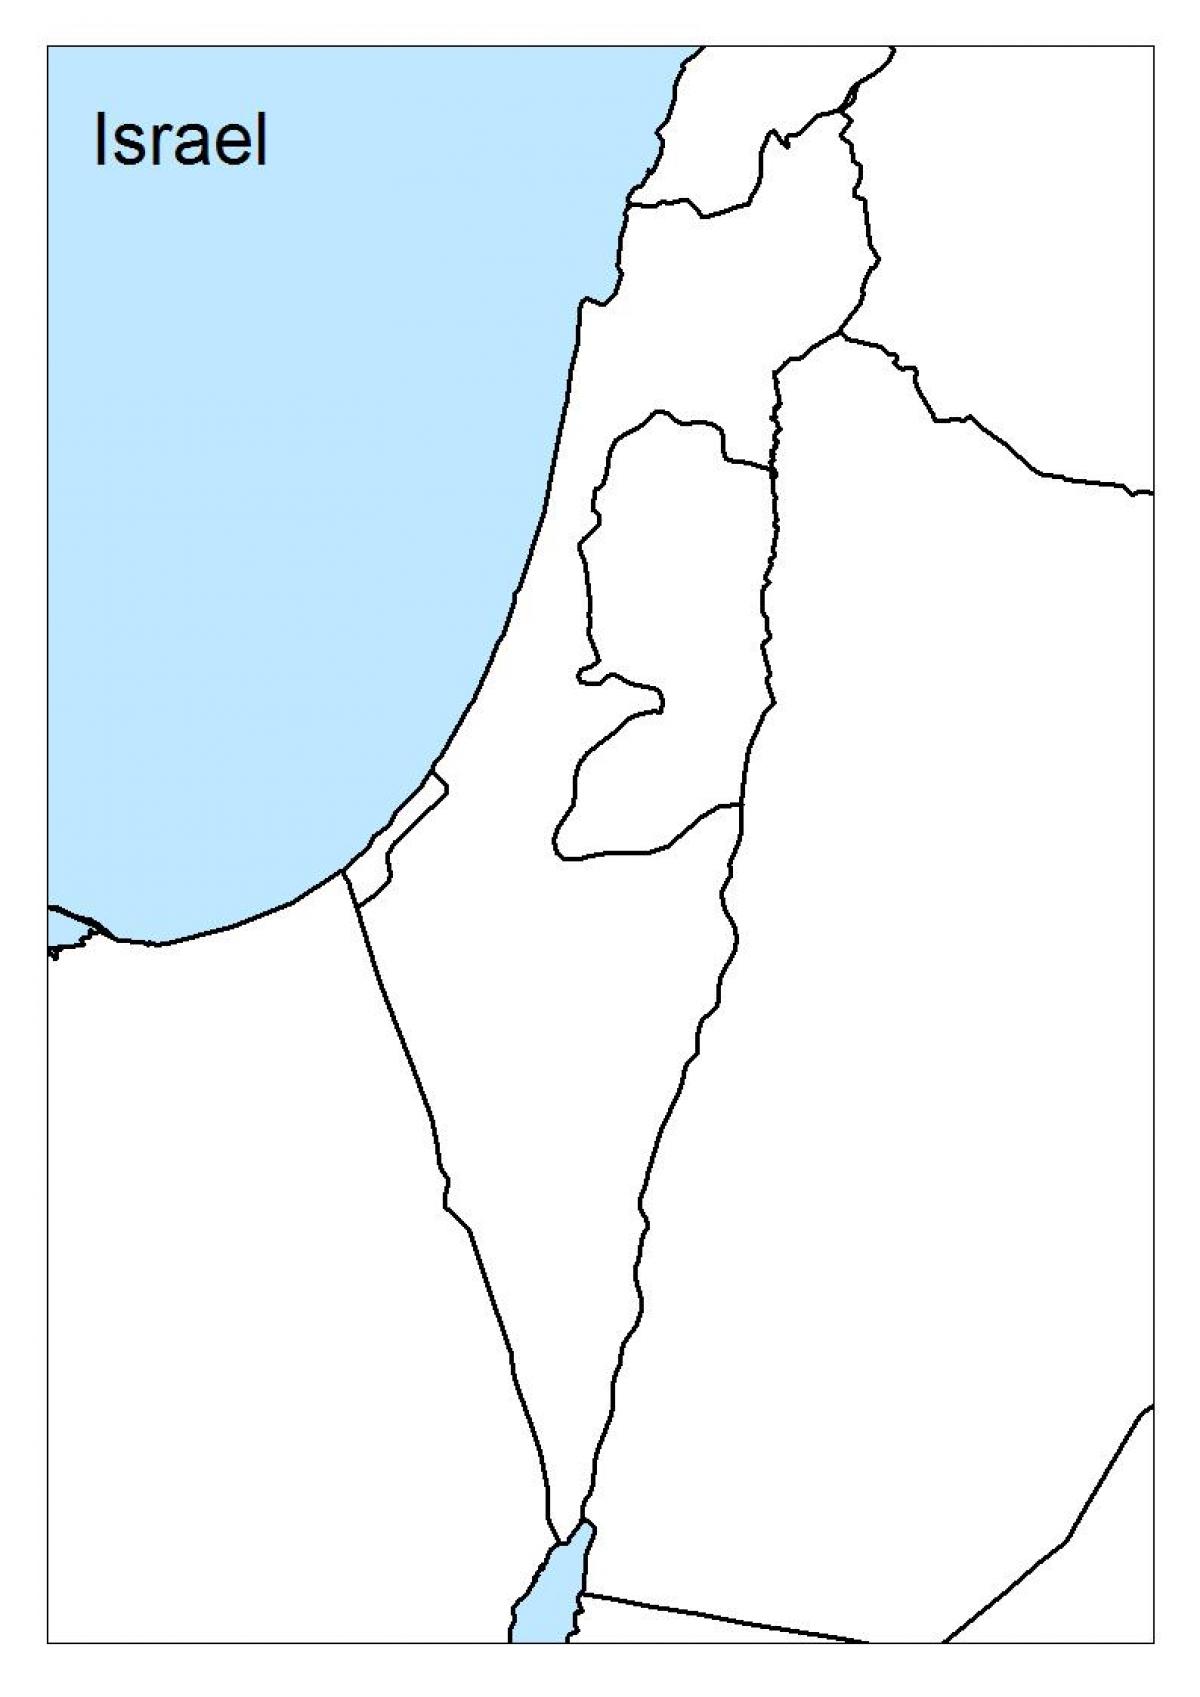 نقشه اسرائیل خالی